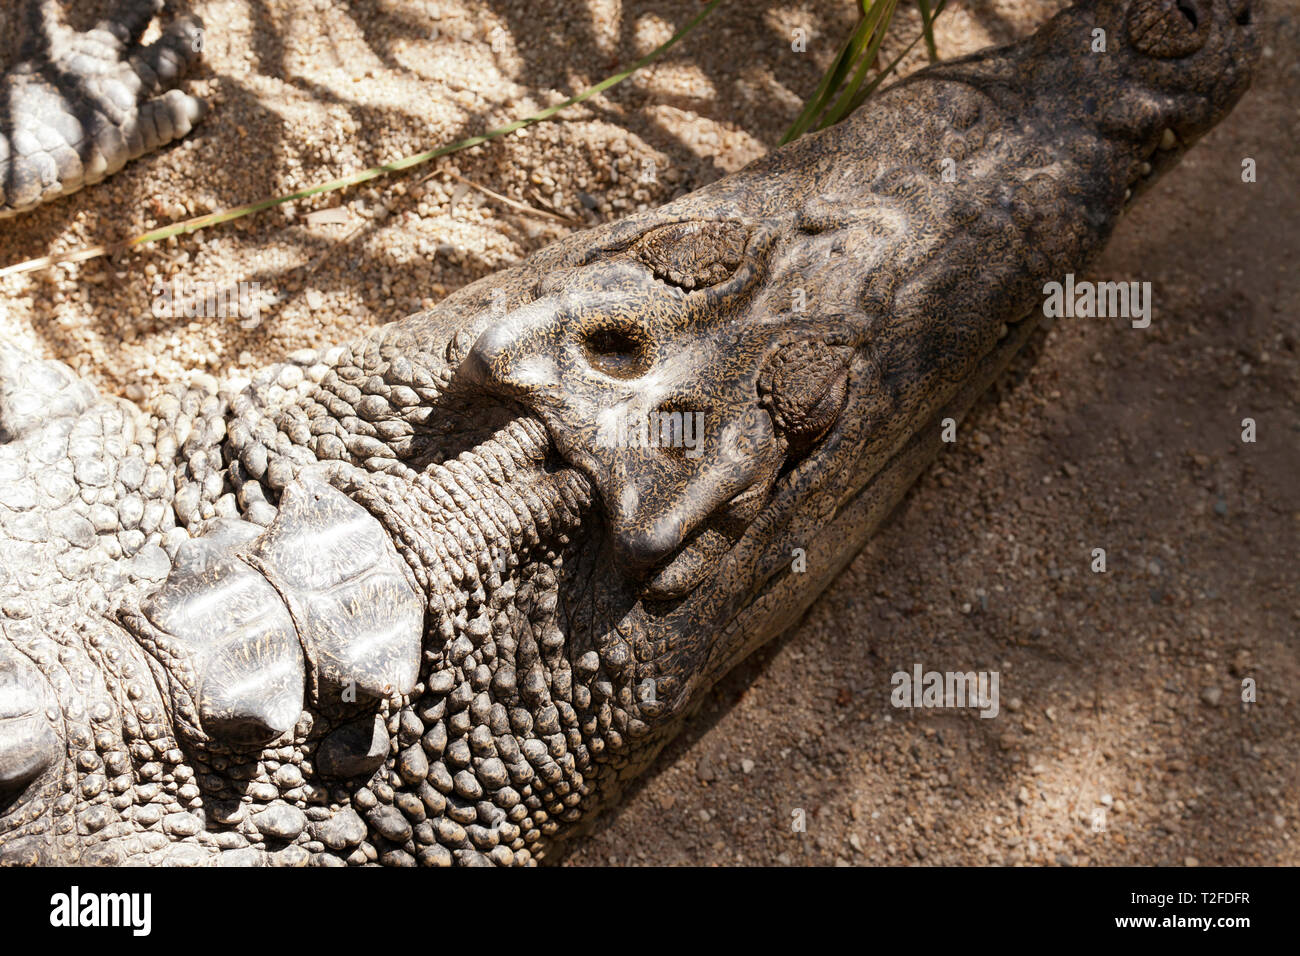 Close-up of a crocodile's head, Hartley's Crocodile Adventures wildlife sanctuary, Captain Cook Highway, Wangetti, Queensland, Australia. Stock Photo